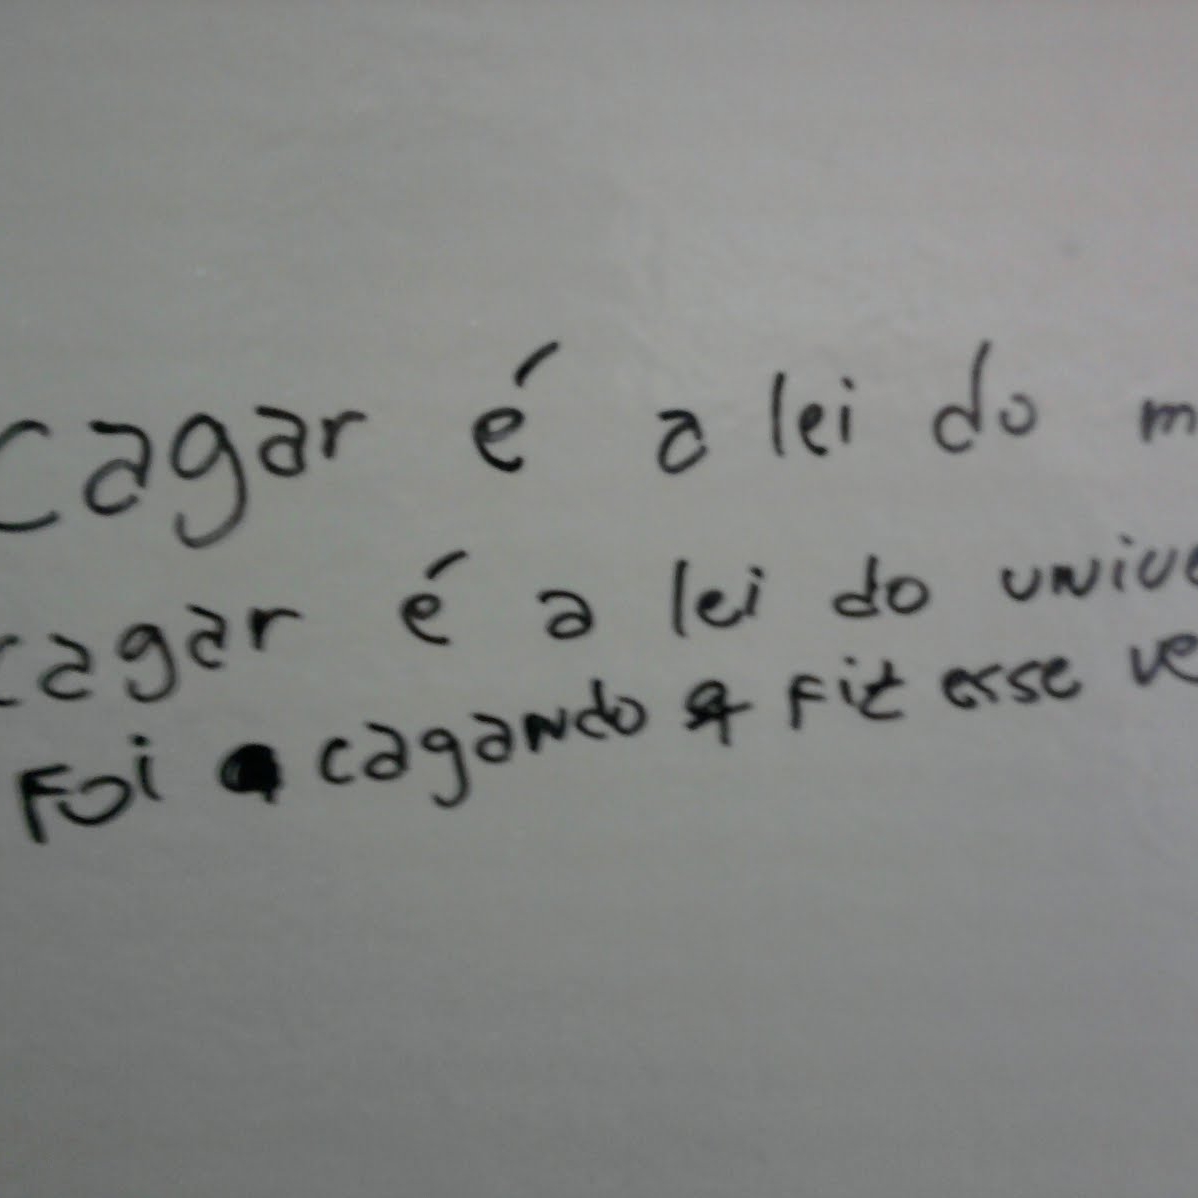 Funny and creative bathroom wall grafitti and sayings